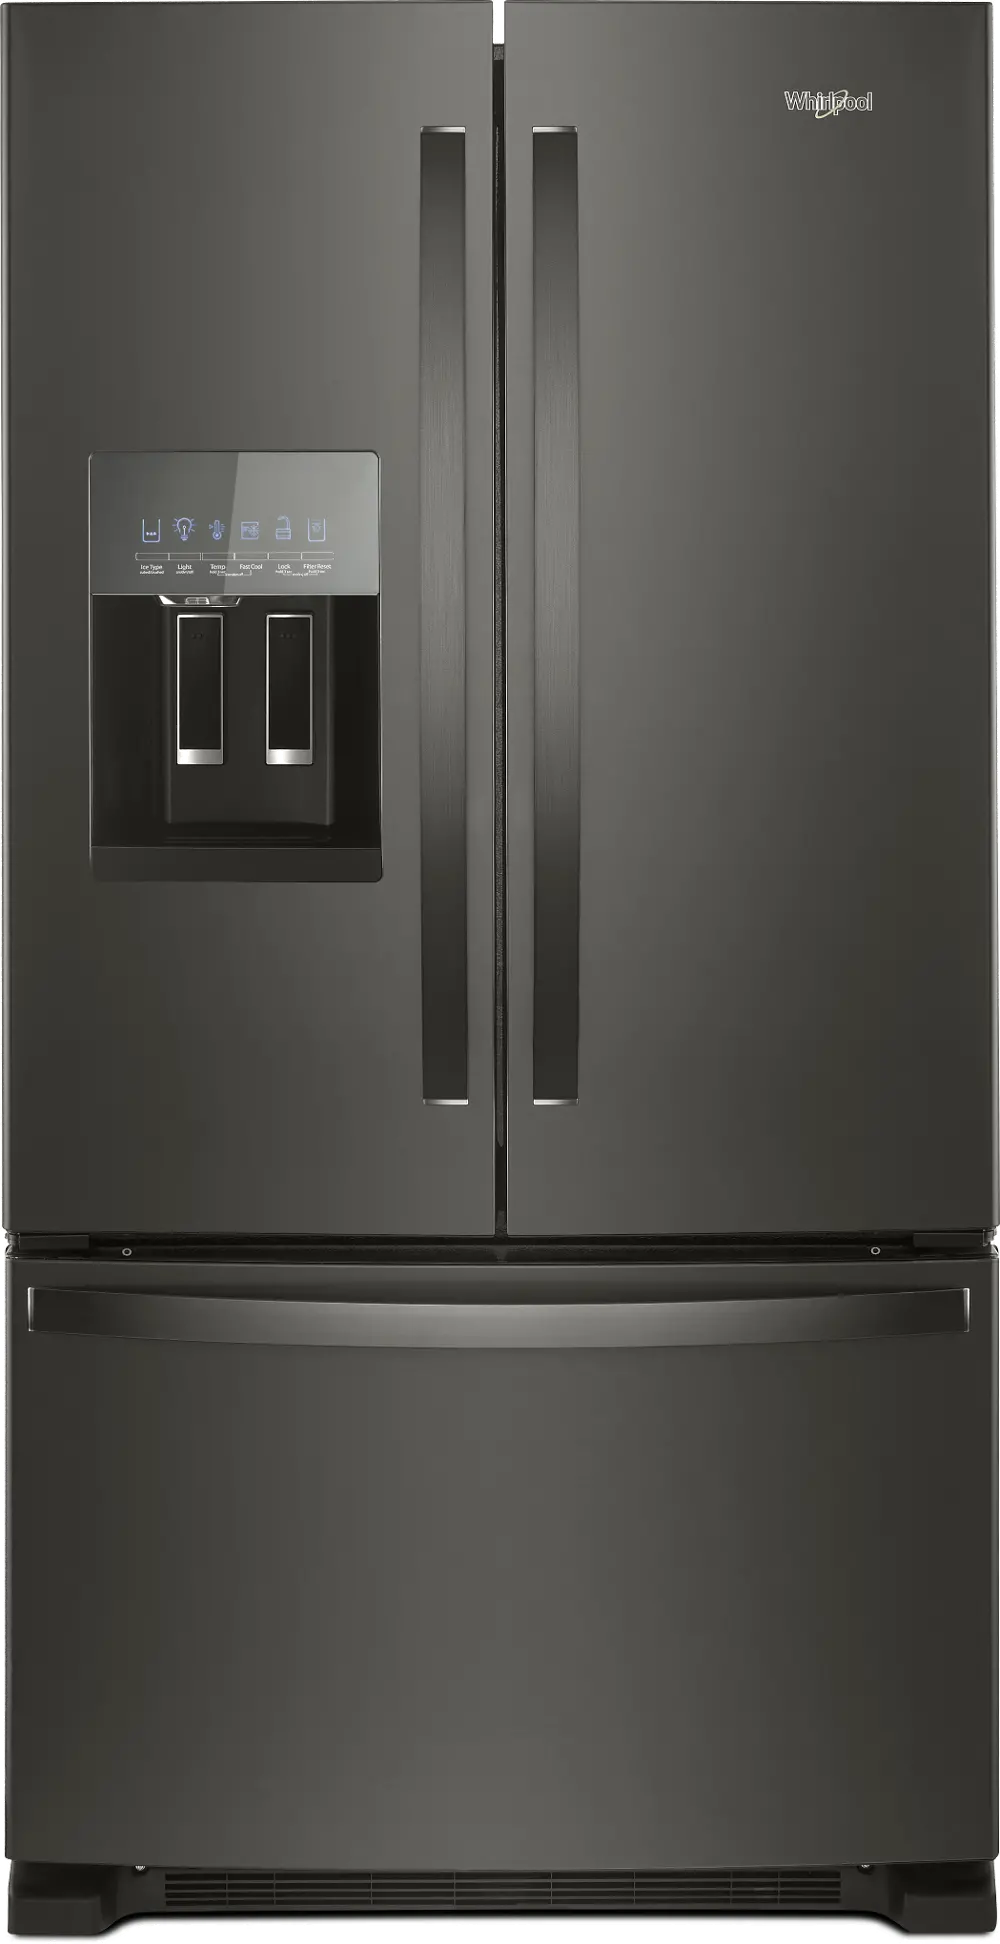 WRF555SDHV Whirlpool 24.7 cu ft French Door Refrigerator - Black Stainless Steel-1